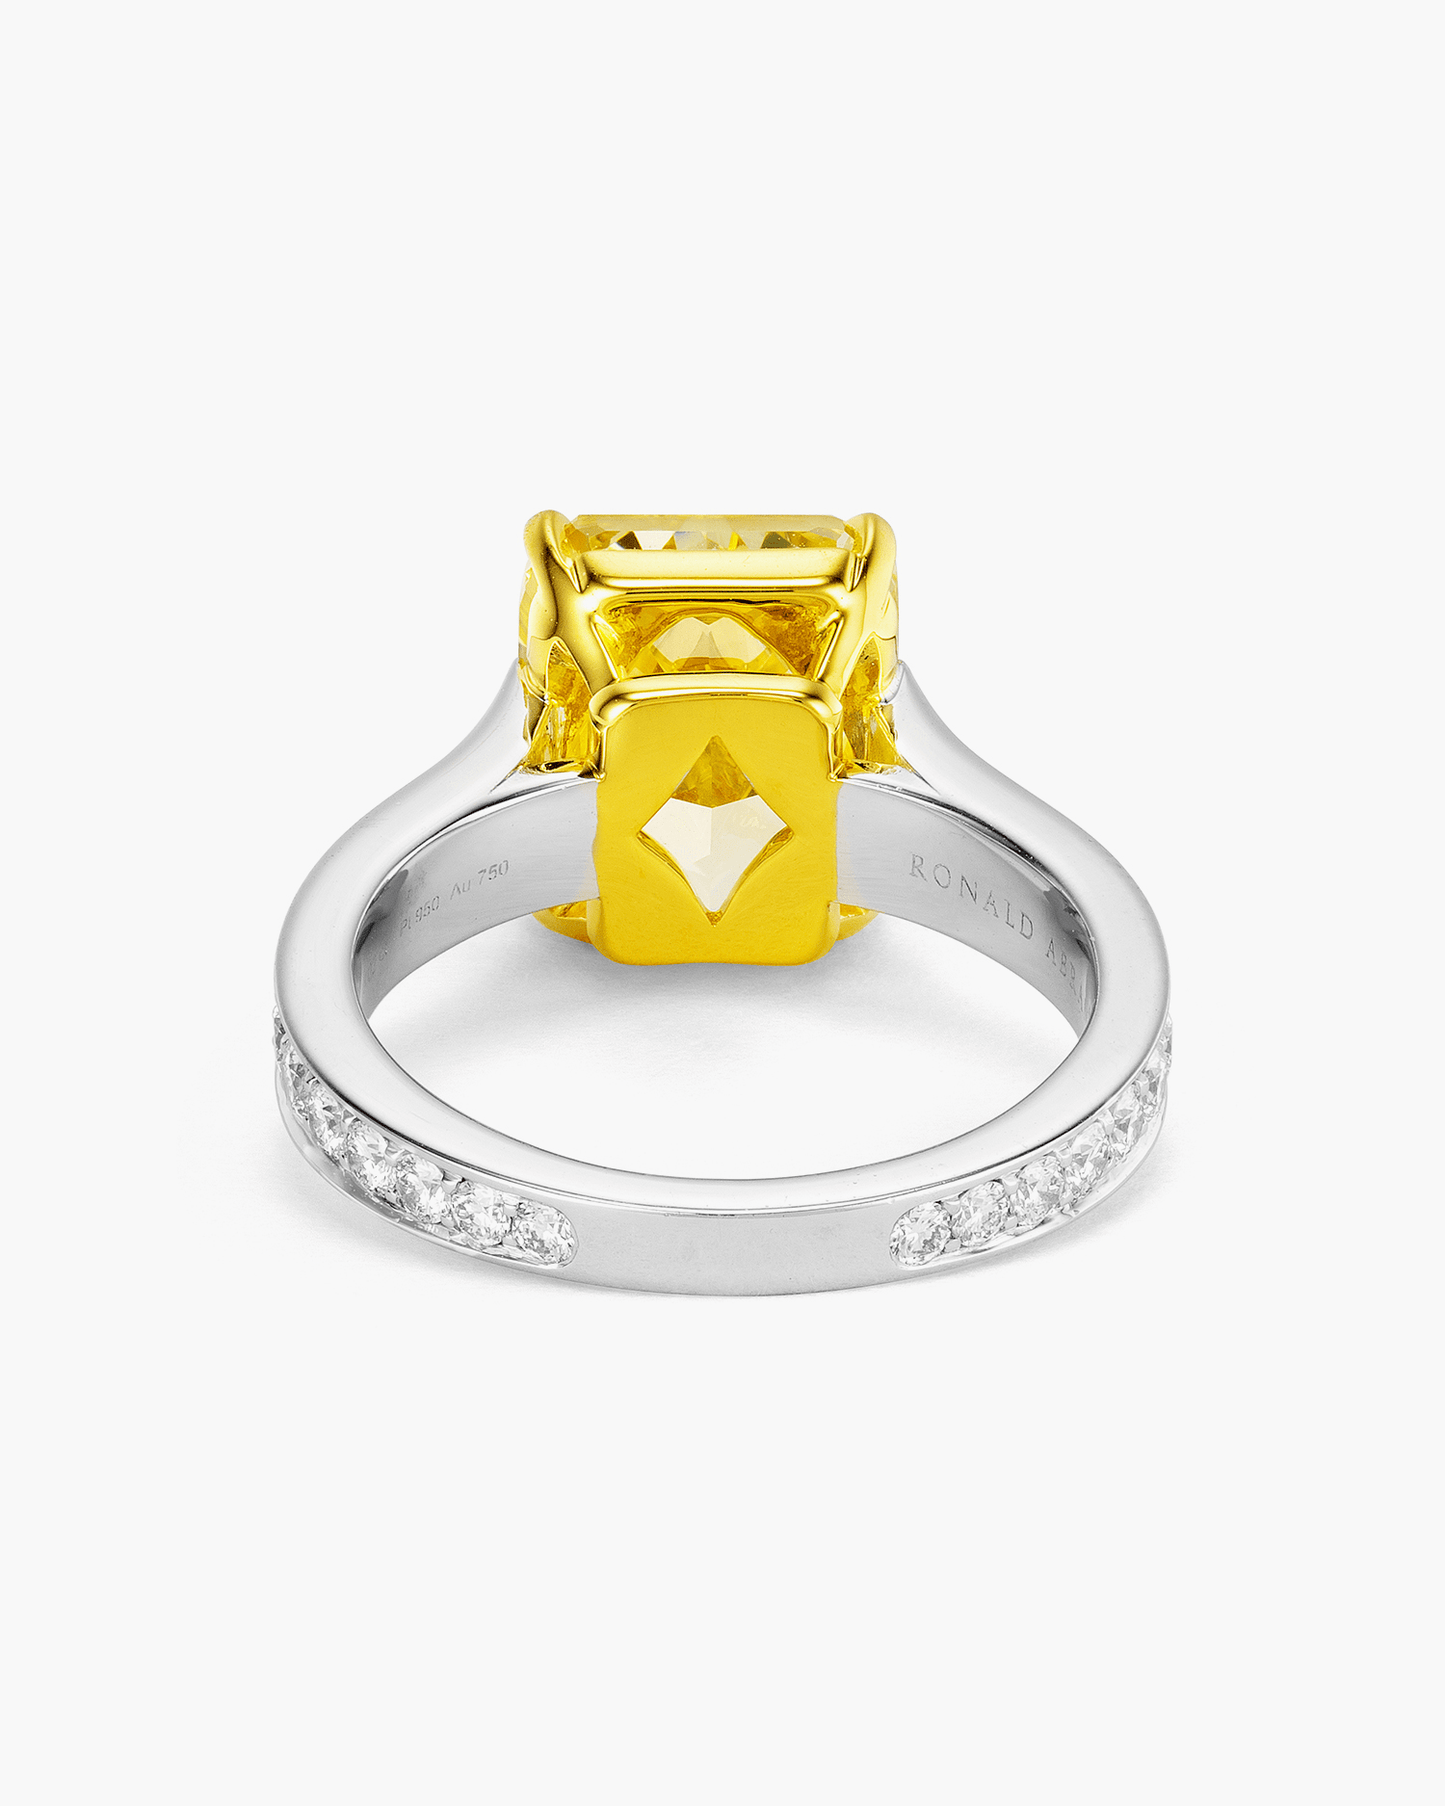 5.02 carat Radiant Cut Yellow and White Diamond Ring